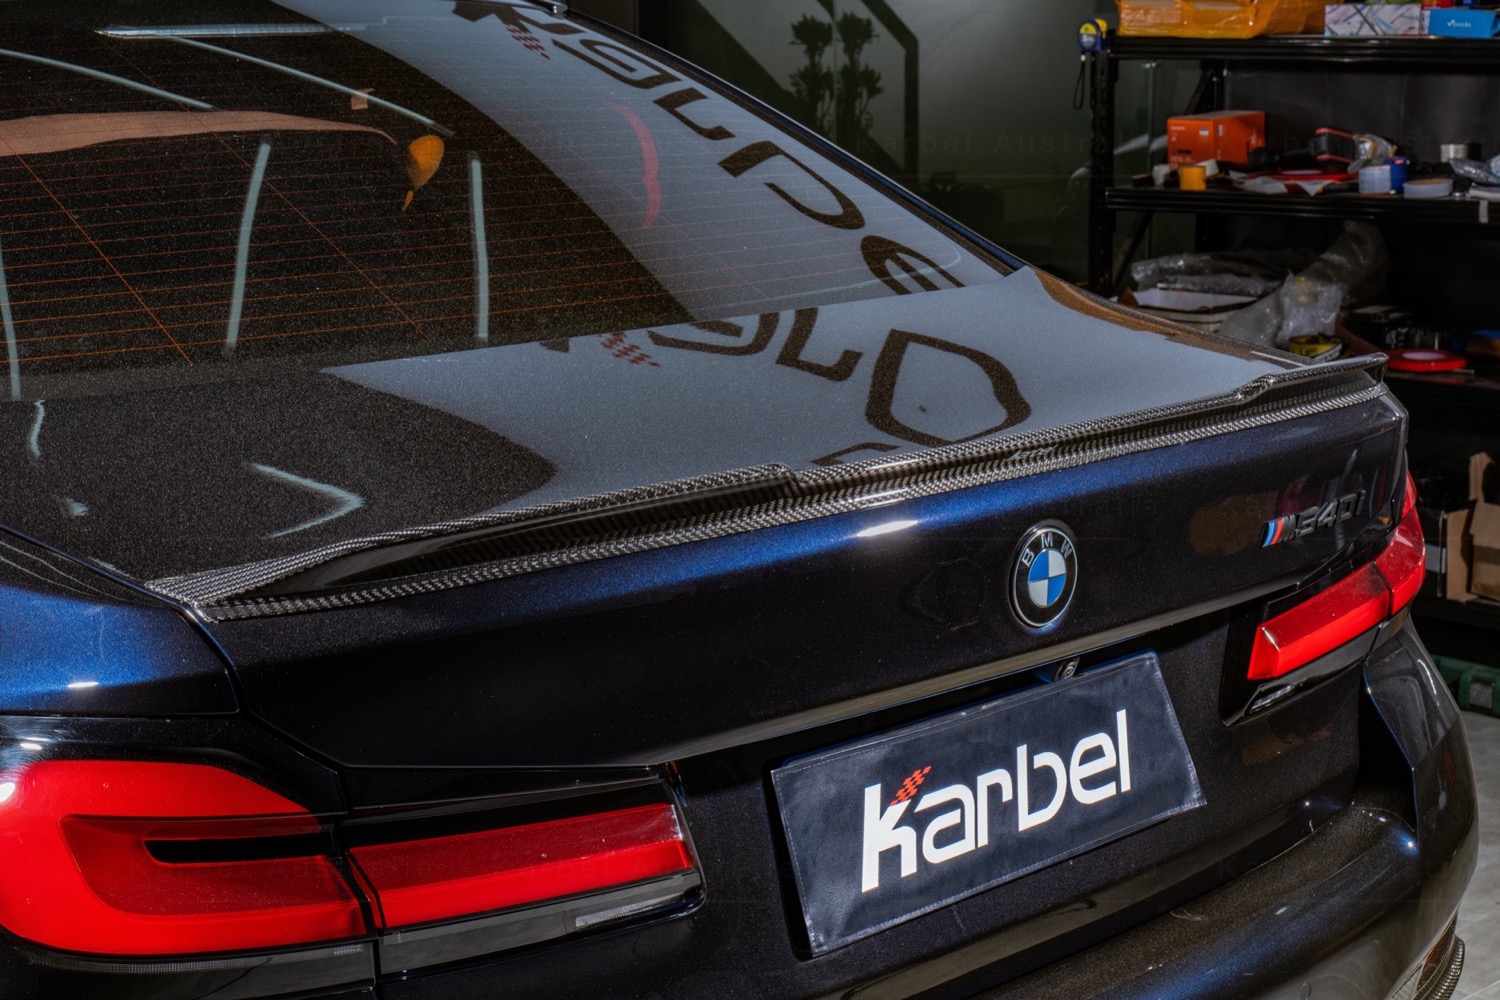 Check price and buy Karbel Carbon Fiber Body kit set for BMW 5 series G30 LCI